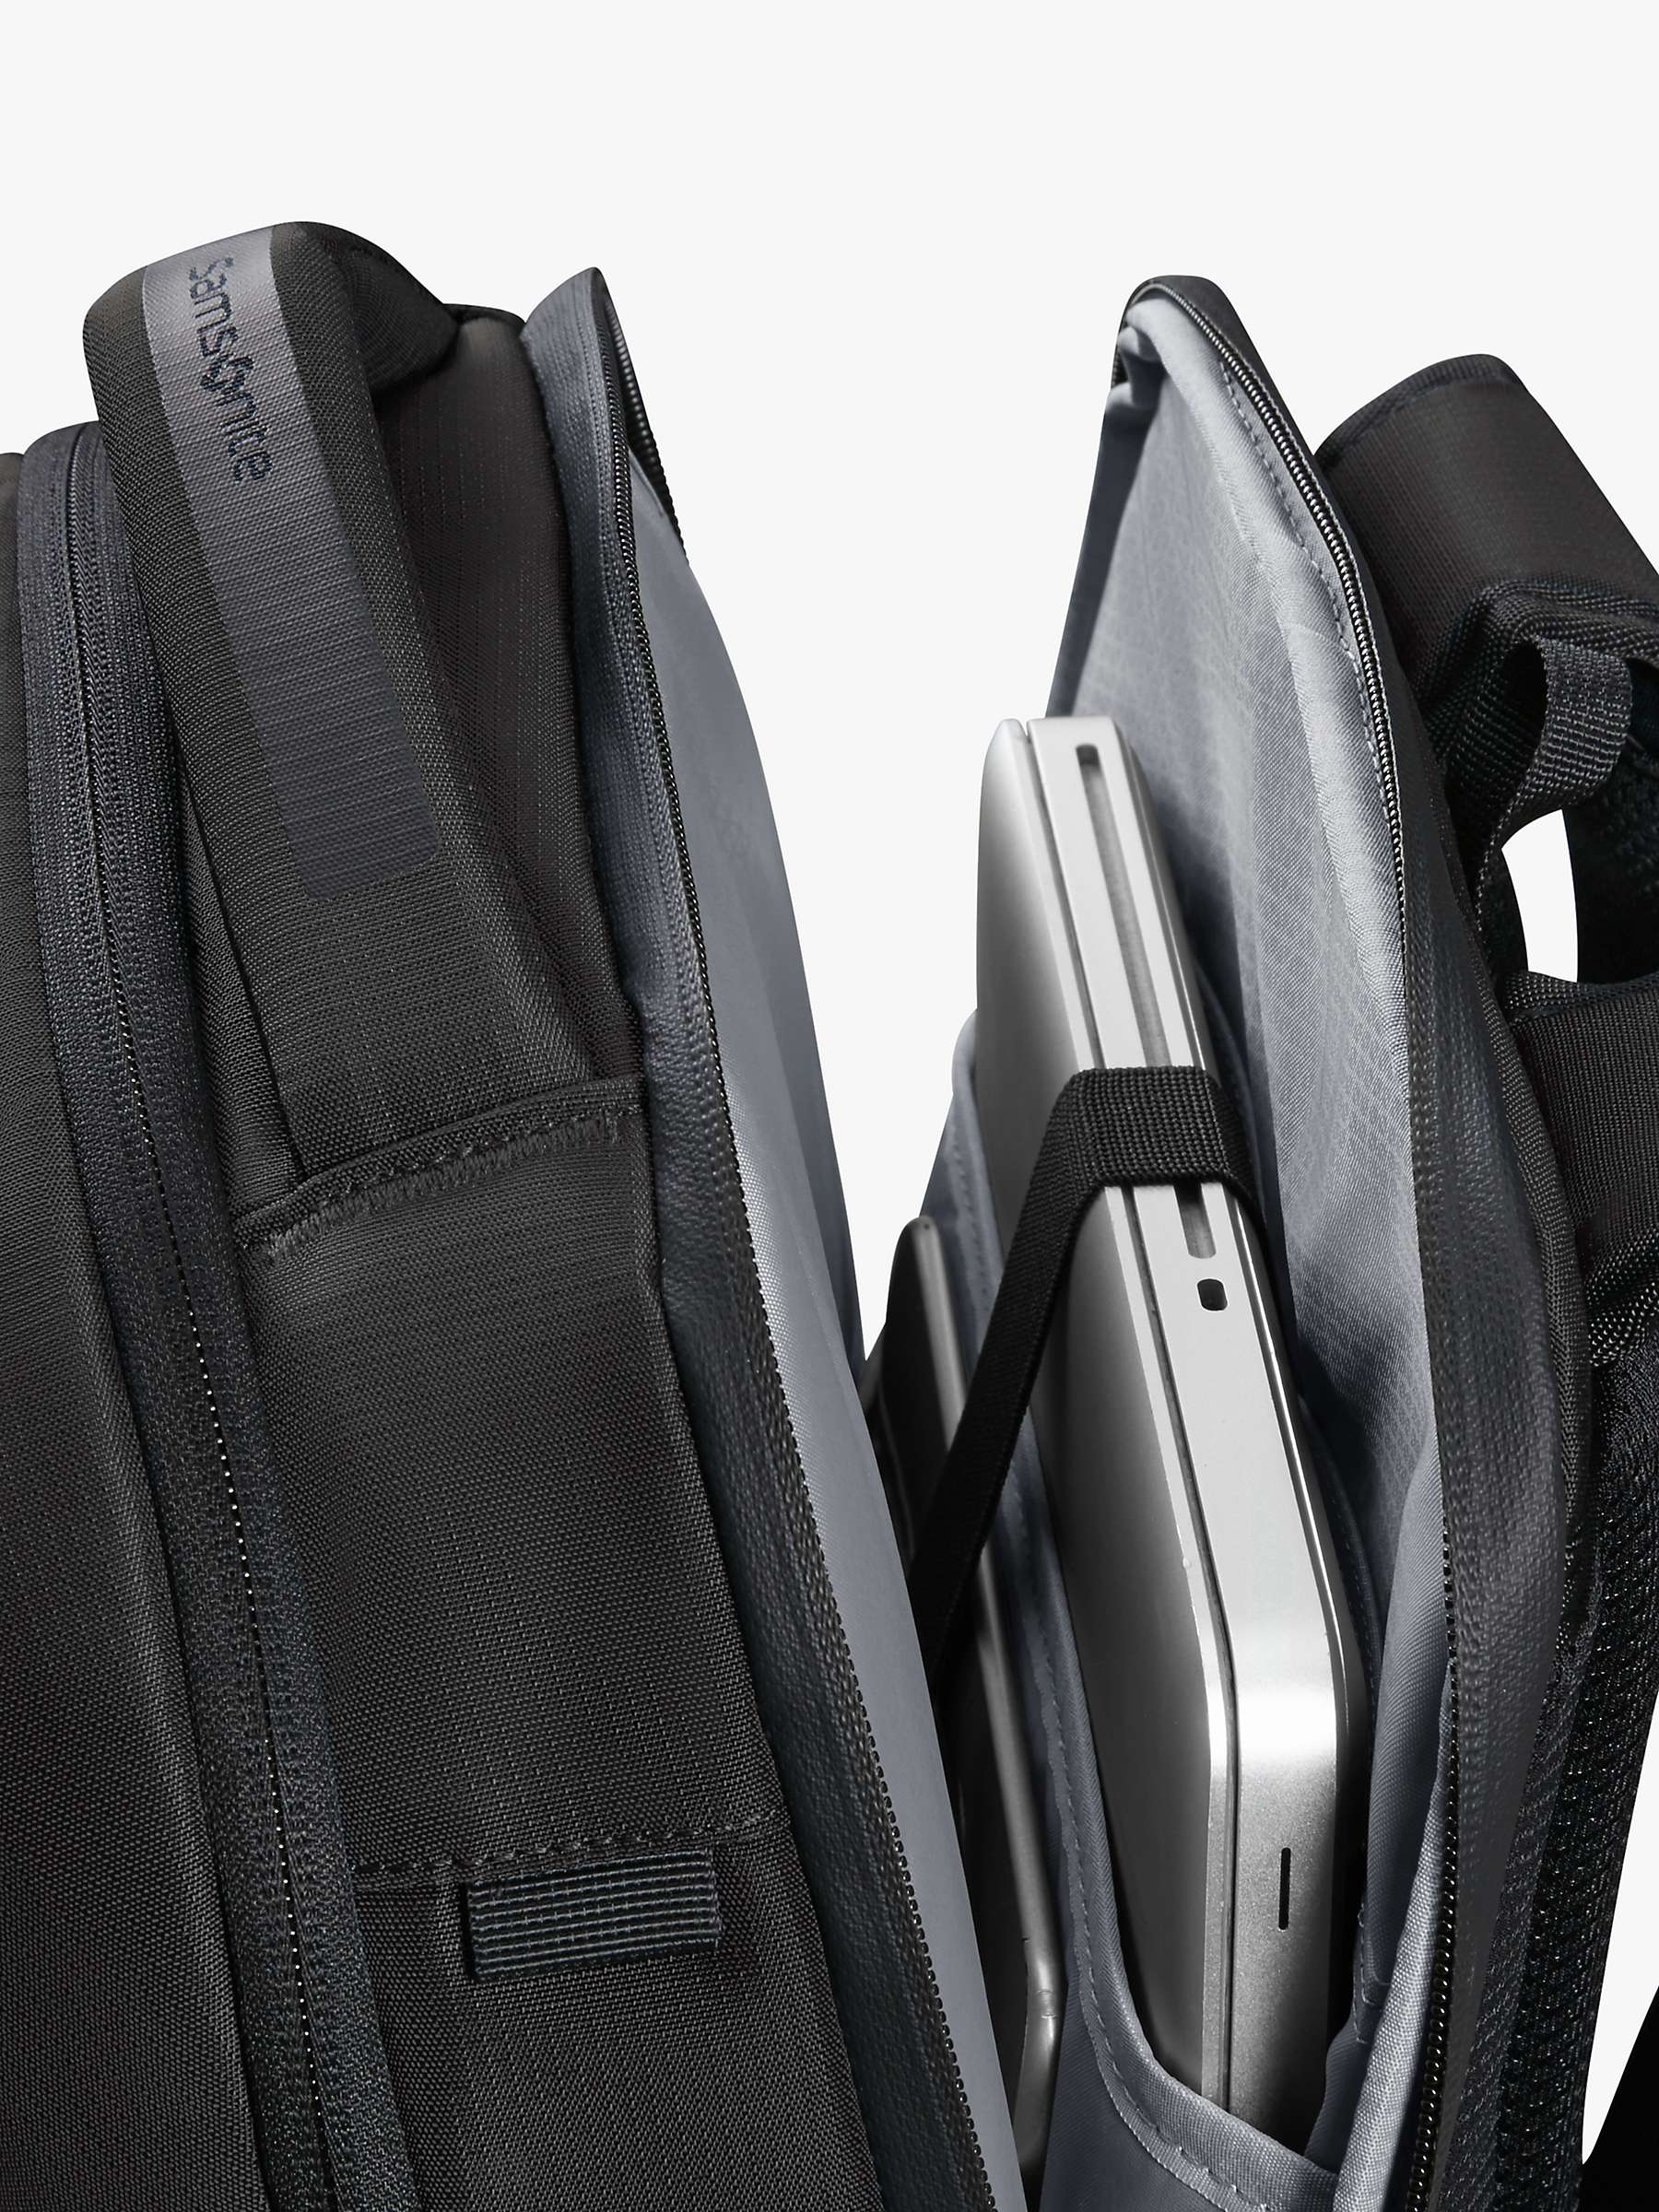 Buy Samsonite Biz2Go 14.1" Recycled Laptop Backpack Online at johnlewis.com